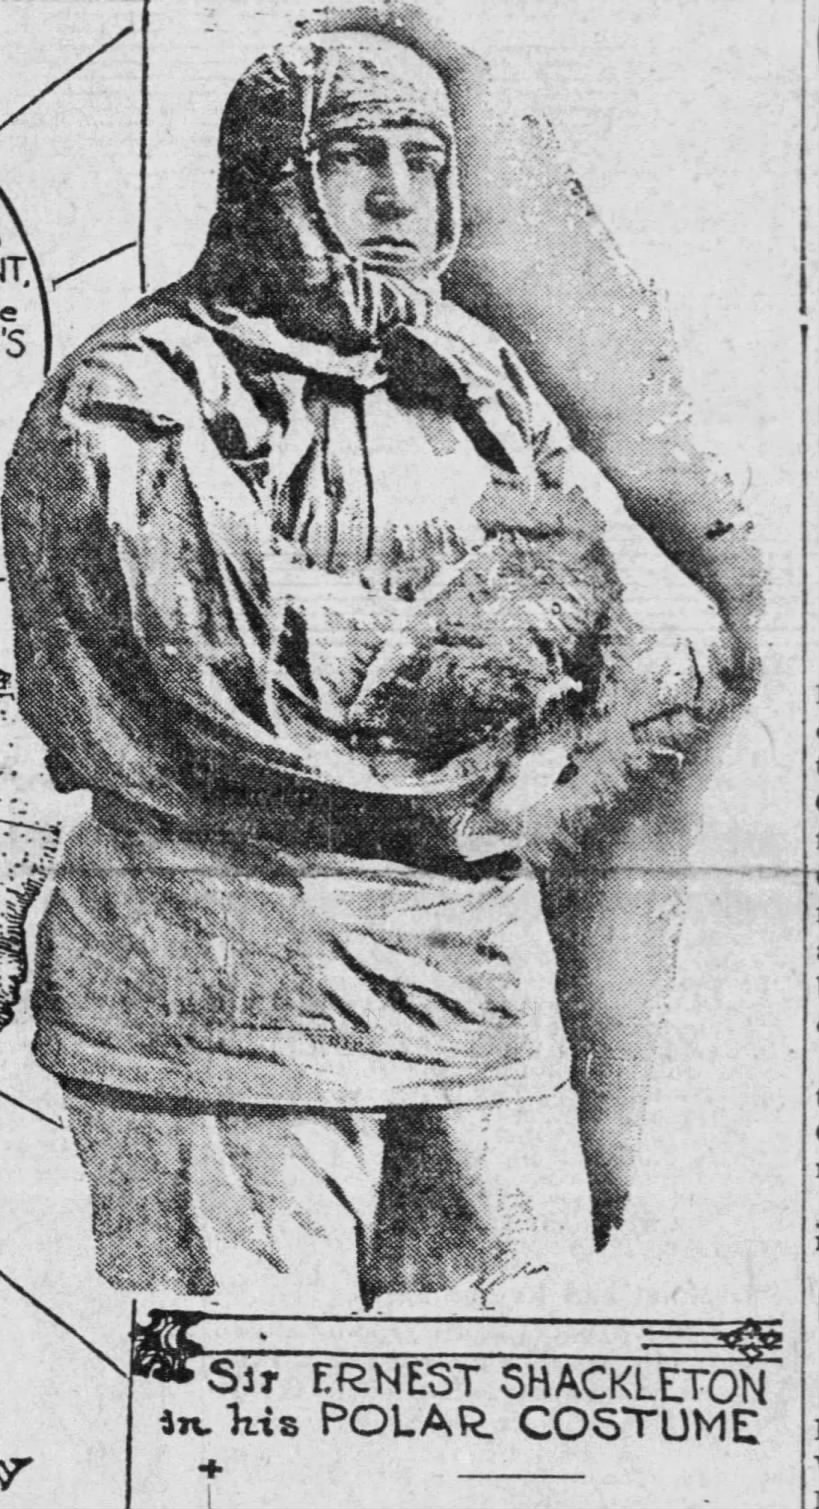 Ernest Shackleton in expedition gear